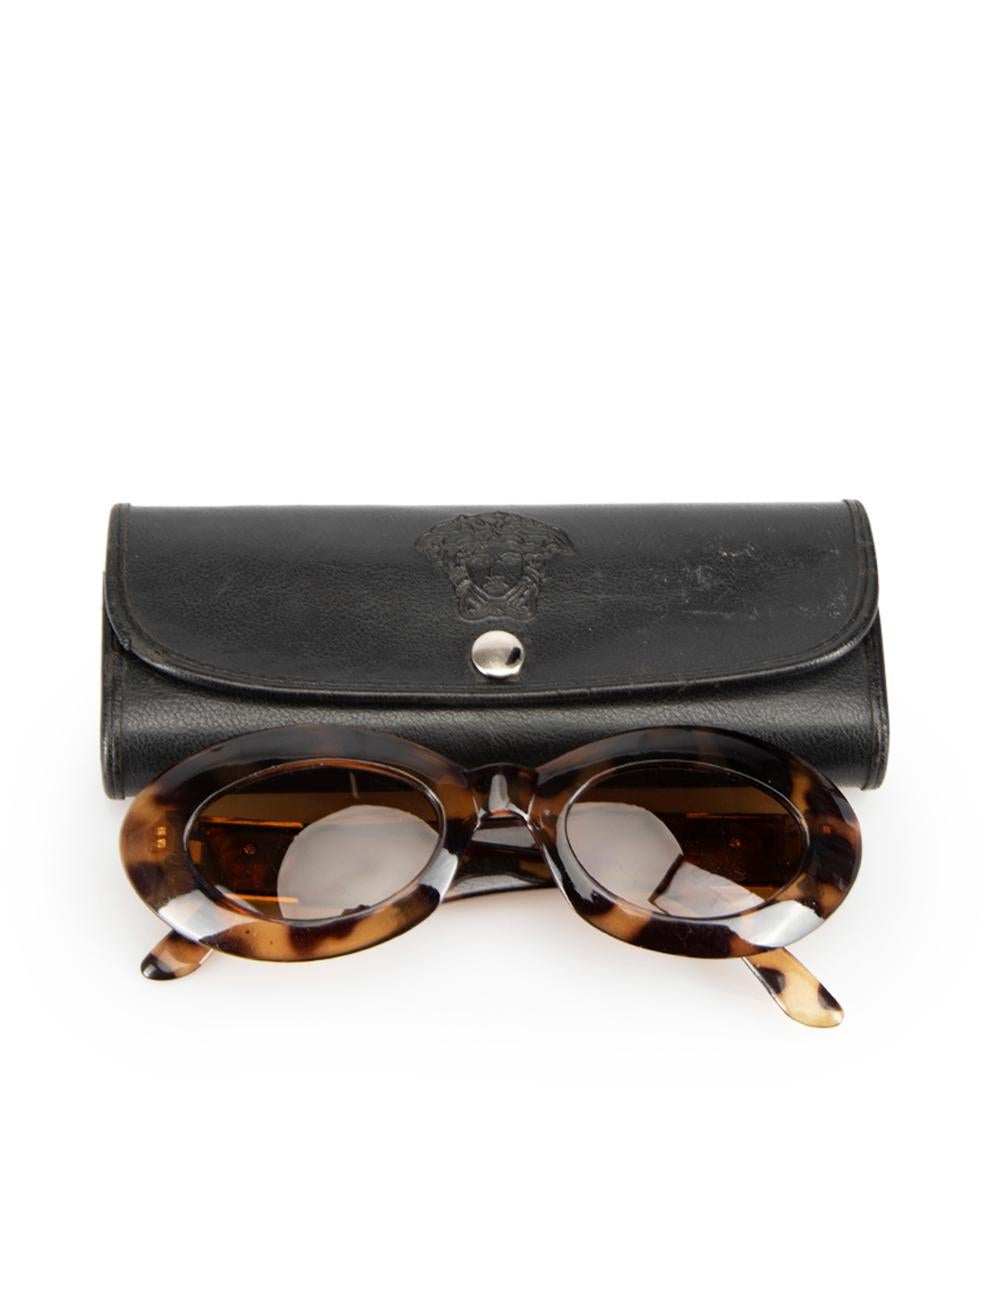 Versace Women's Vintage Brown Tortoiseshell Medusa Oval Sunglasses 4